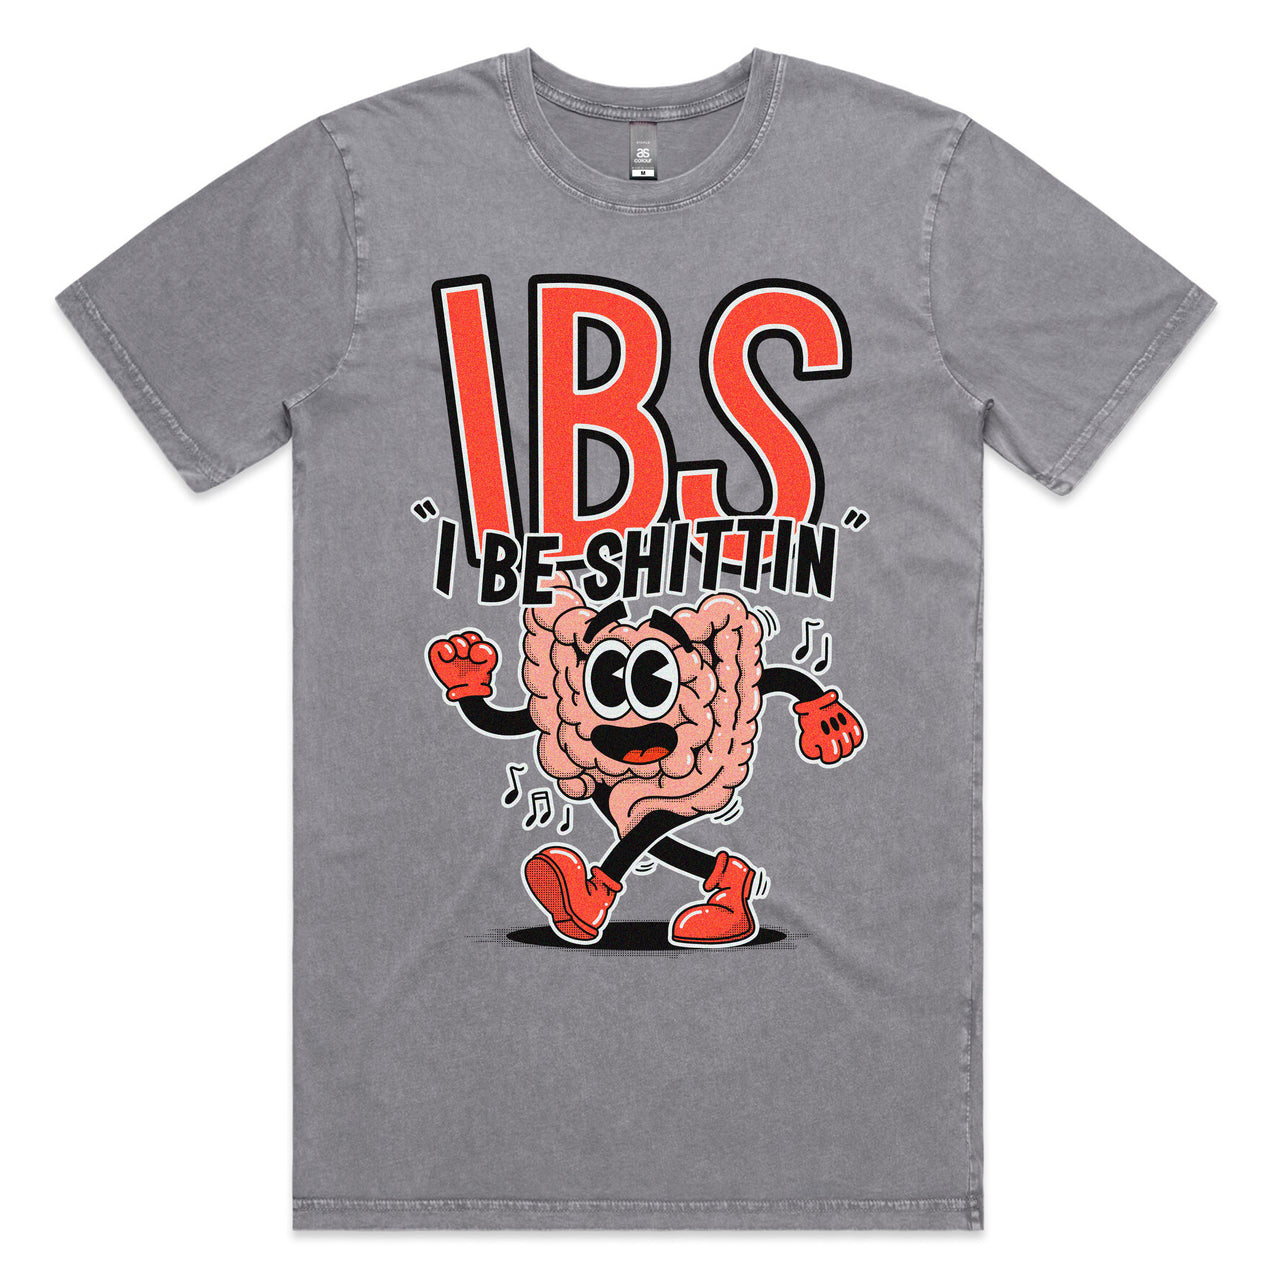 IBS (I Be Shittin) Tee